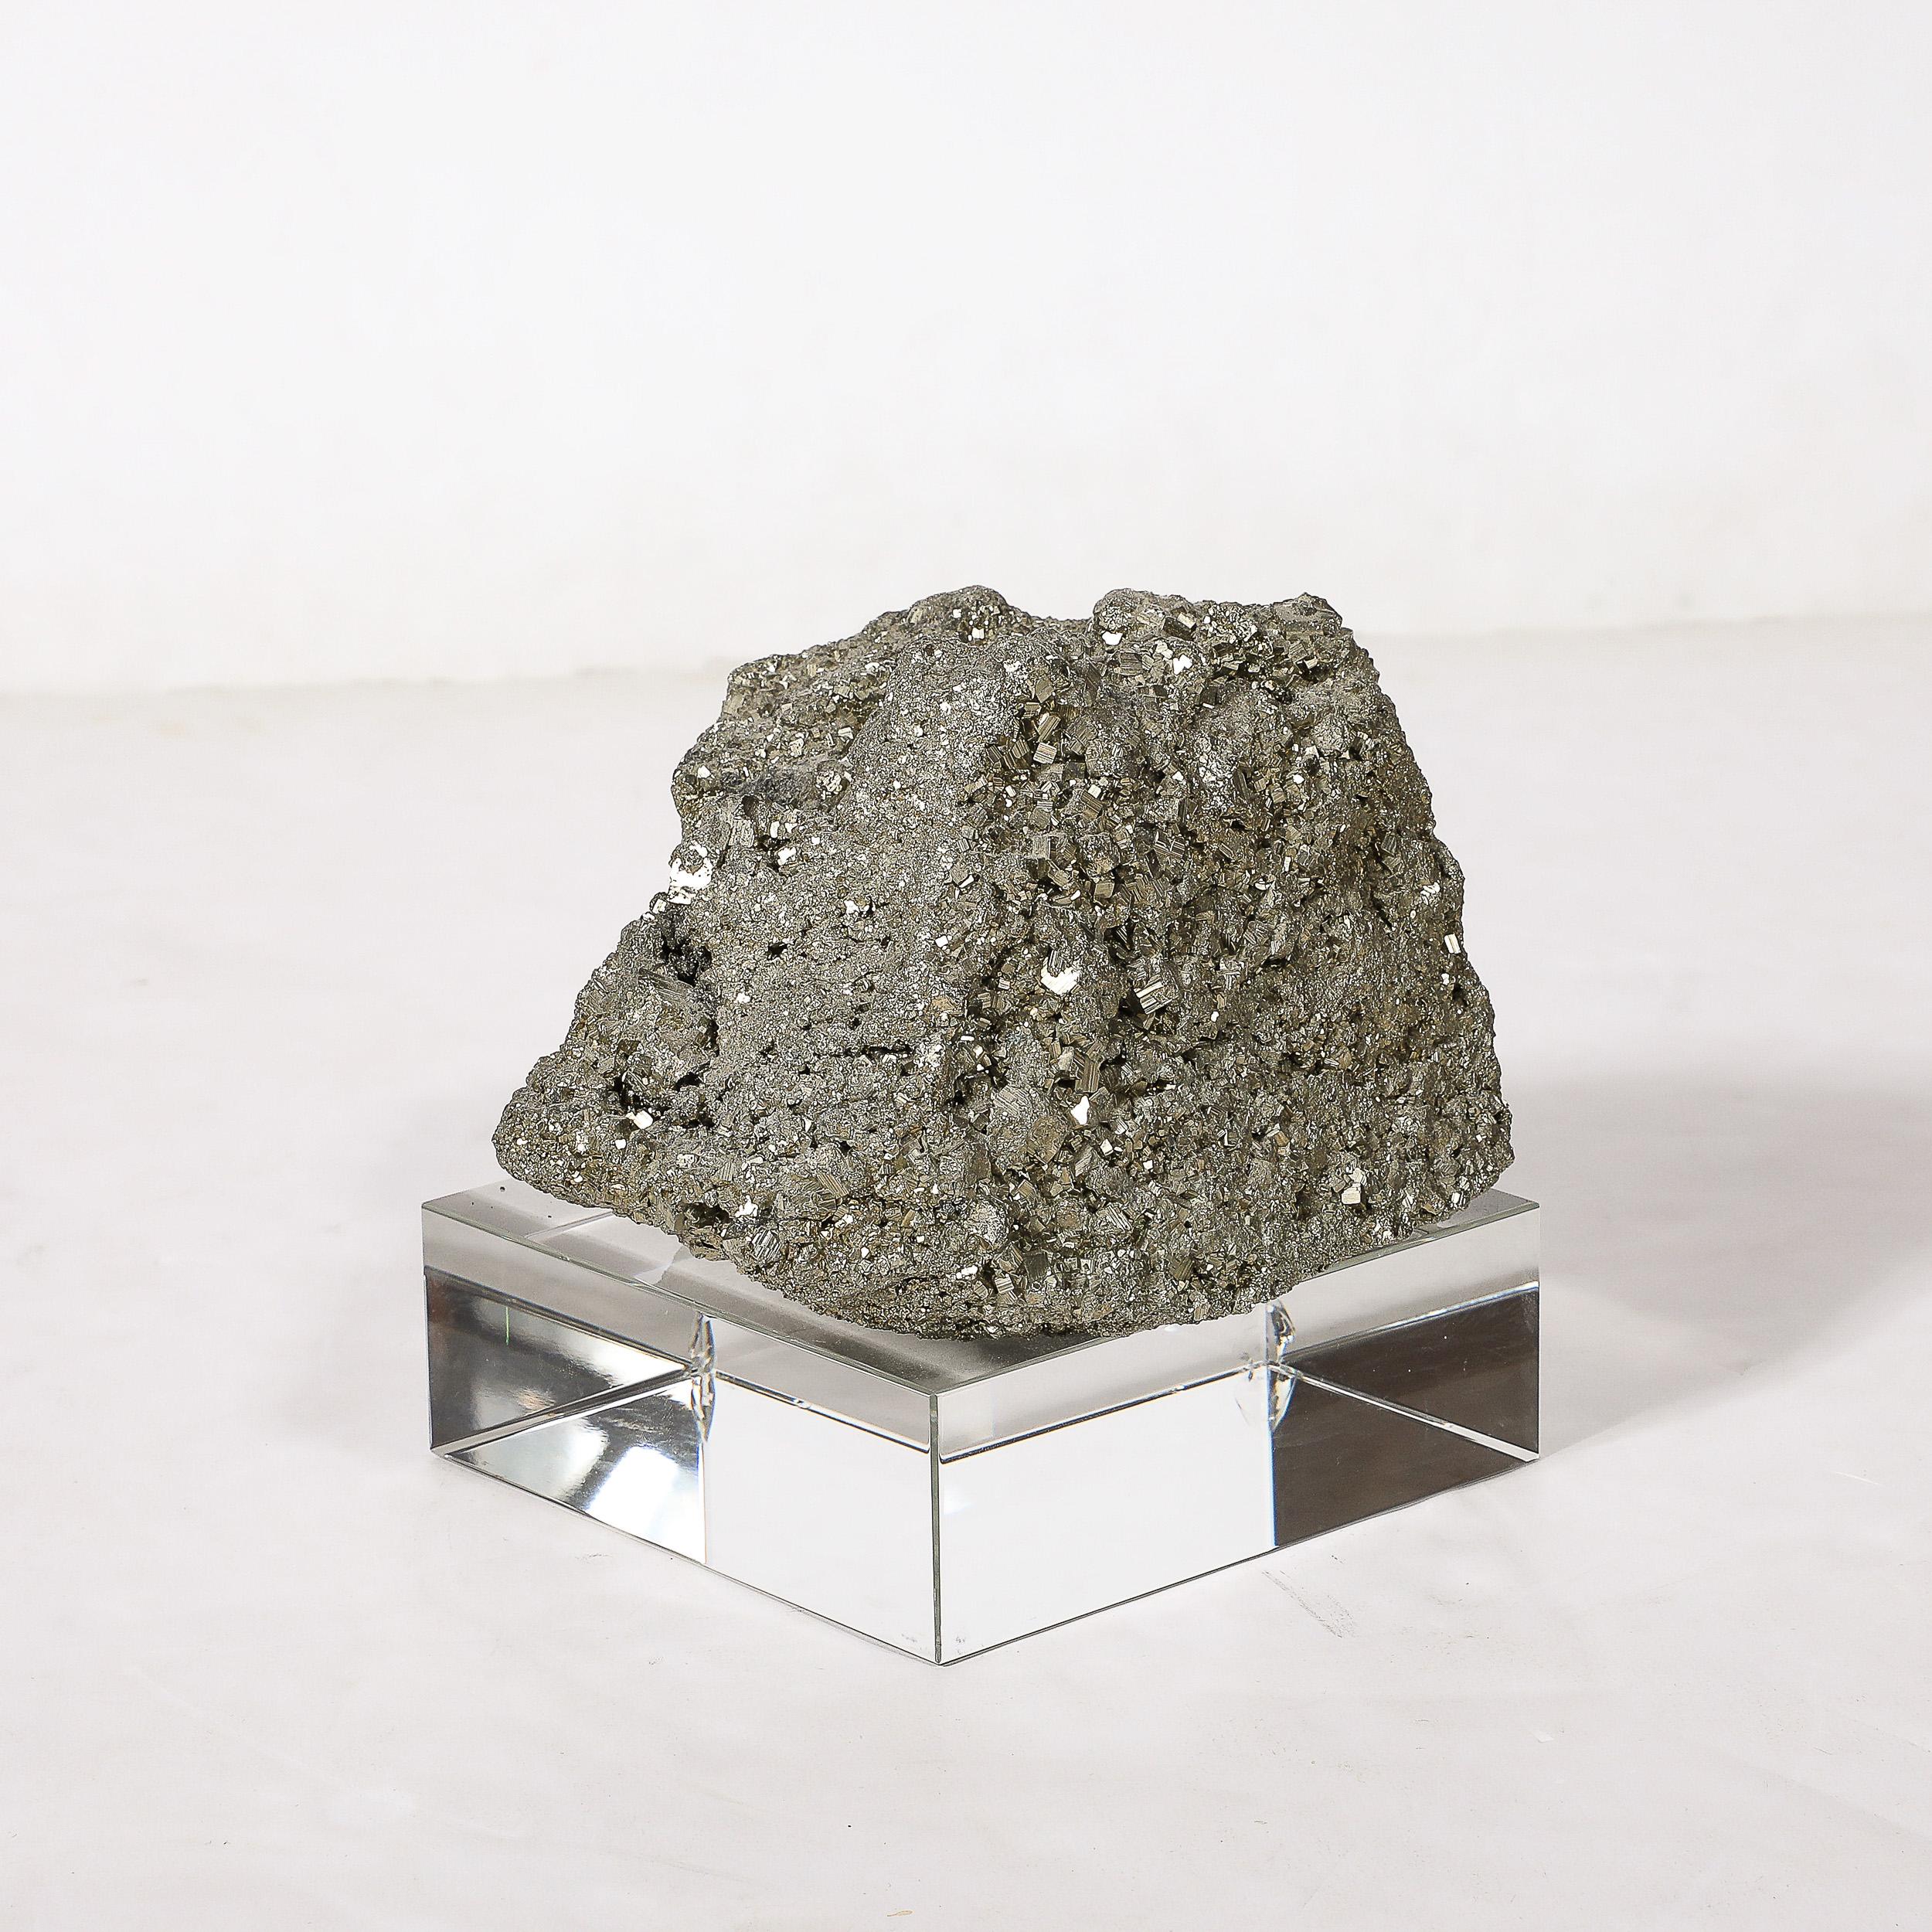 20th Century Modernist Pyrite Rock Specimen on Rectilinear Lucite Base  For Sale